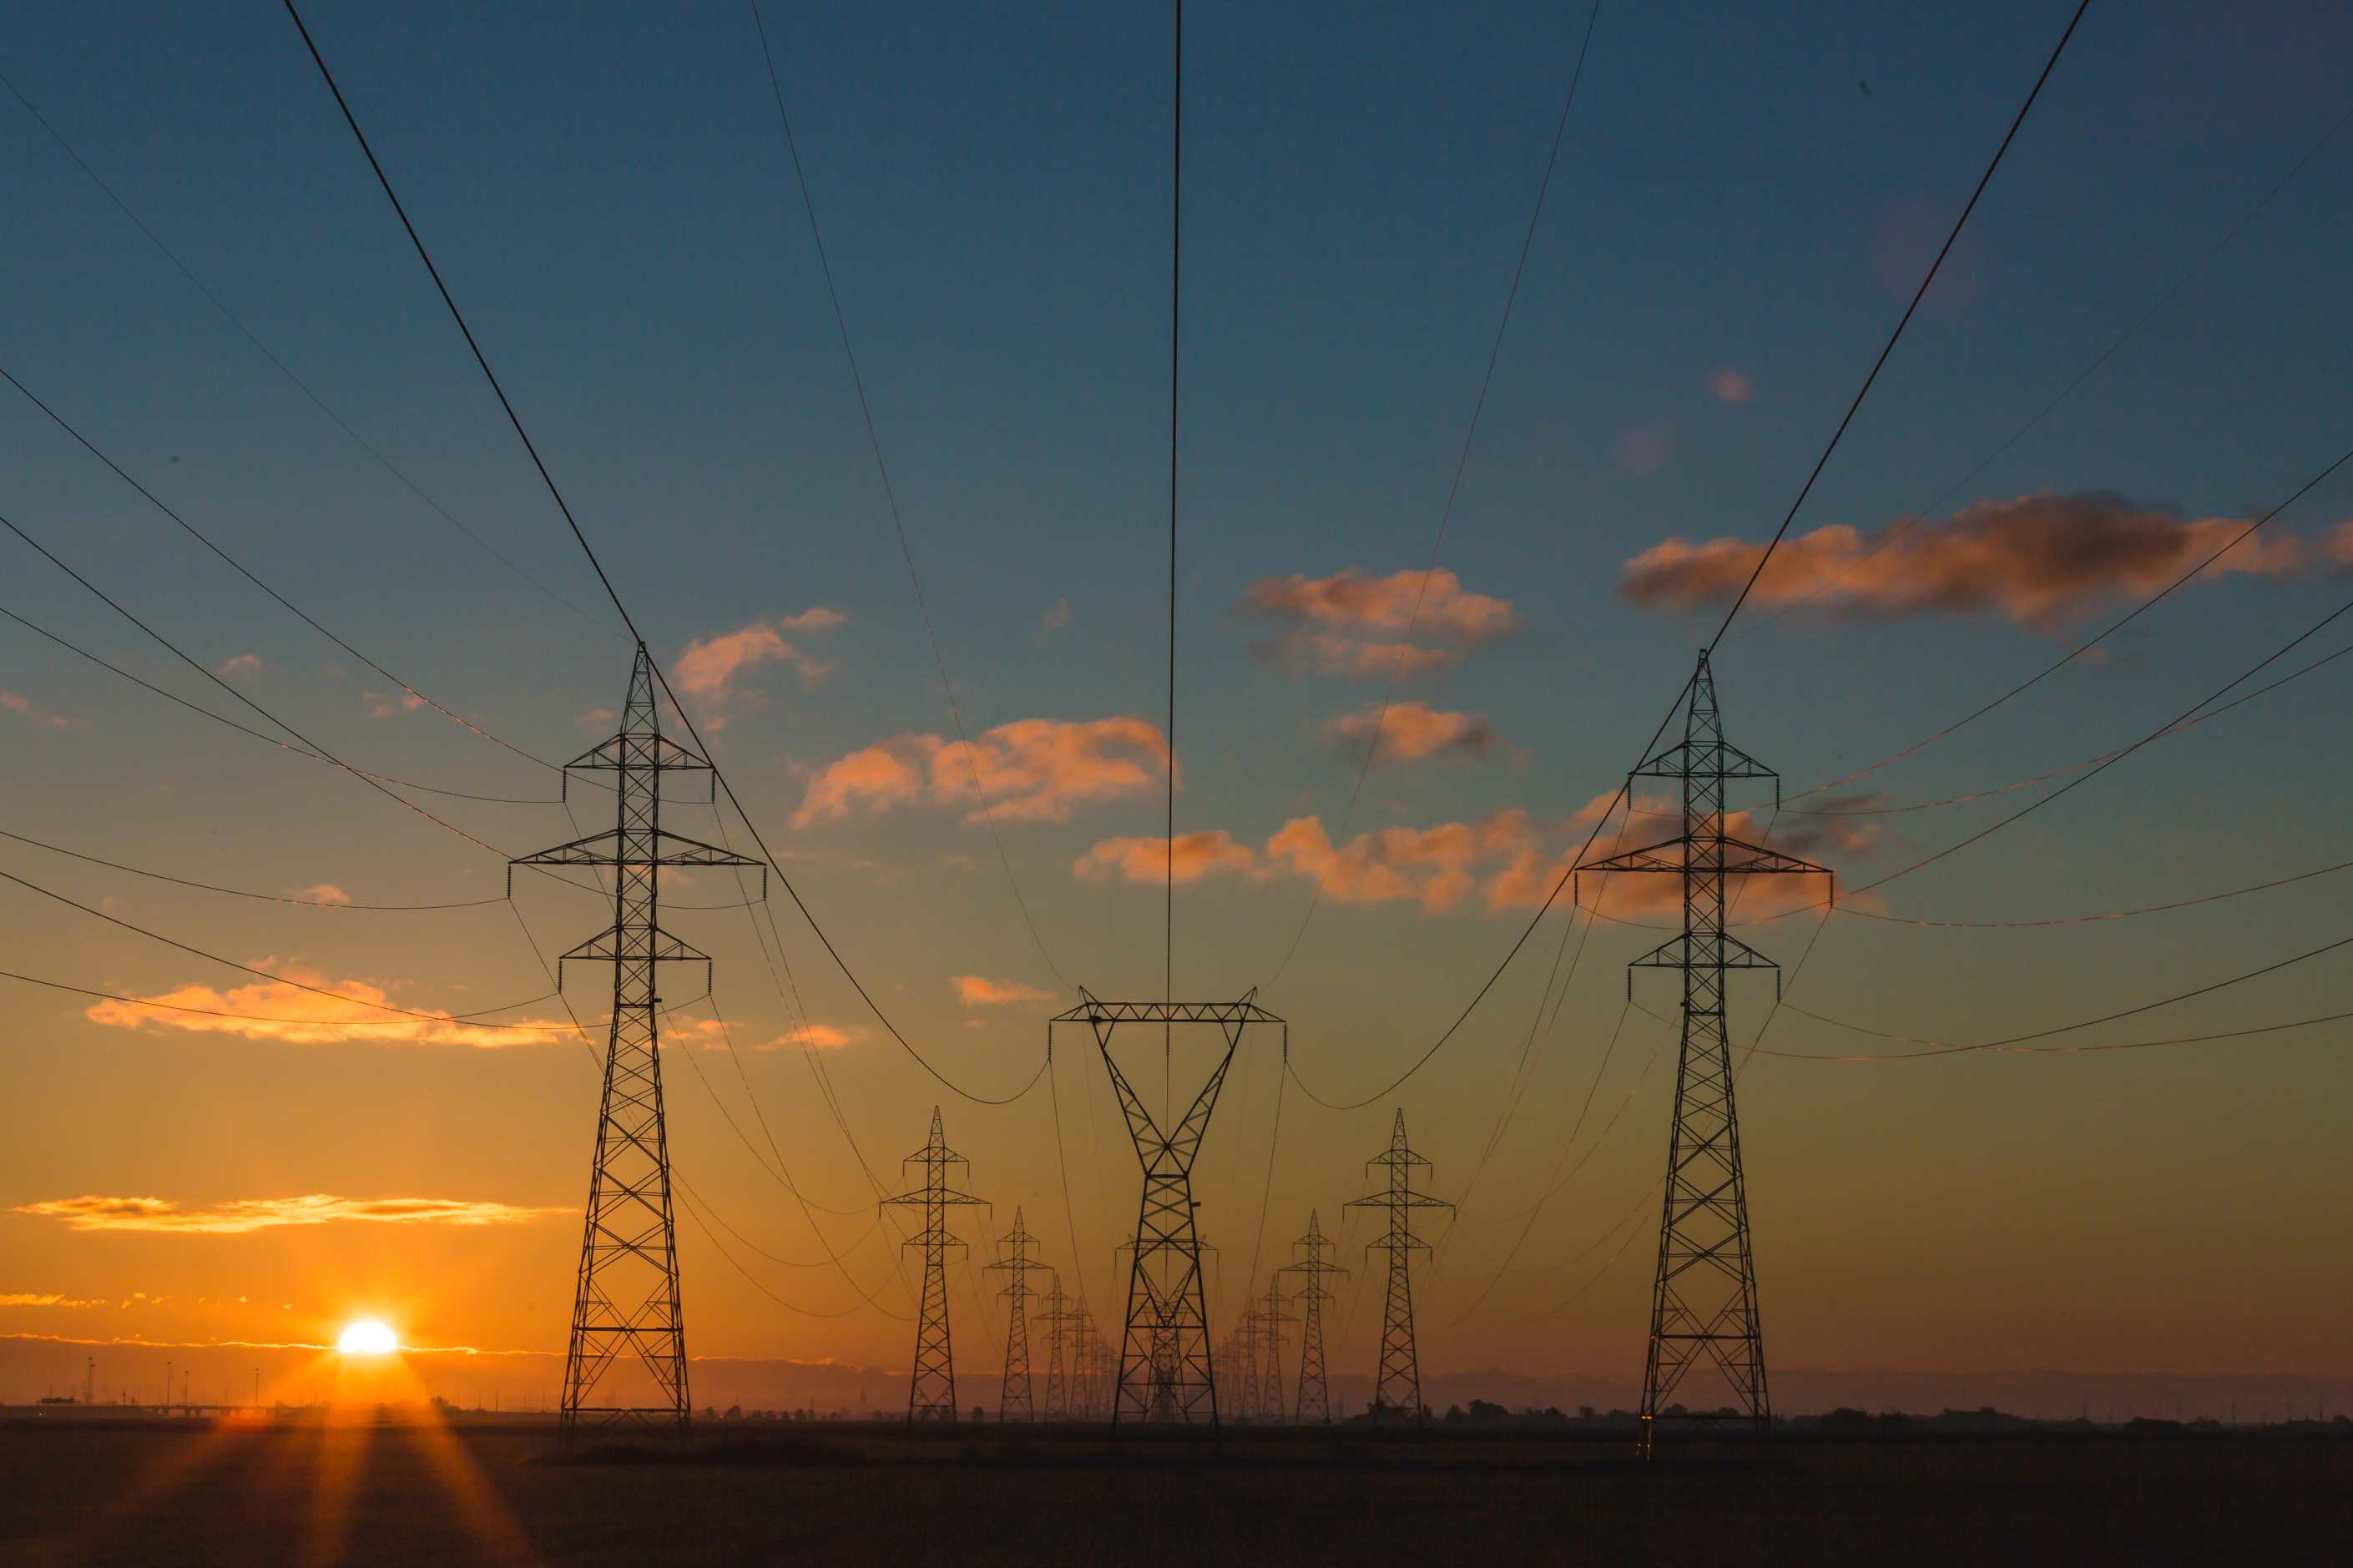 Image of eletcric power transmission lines